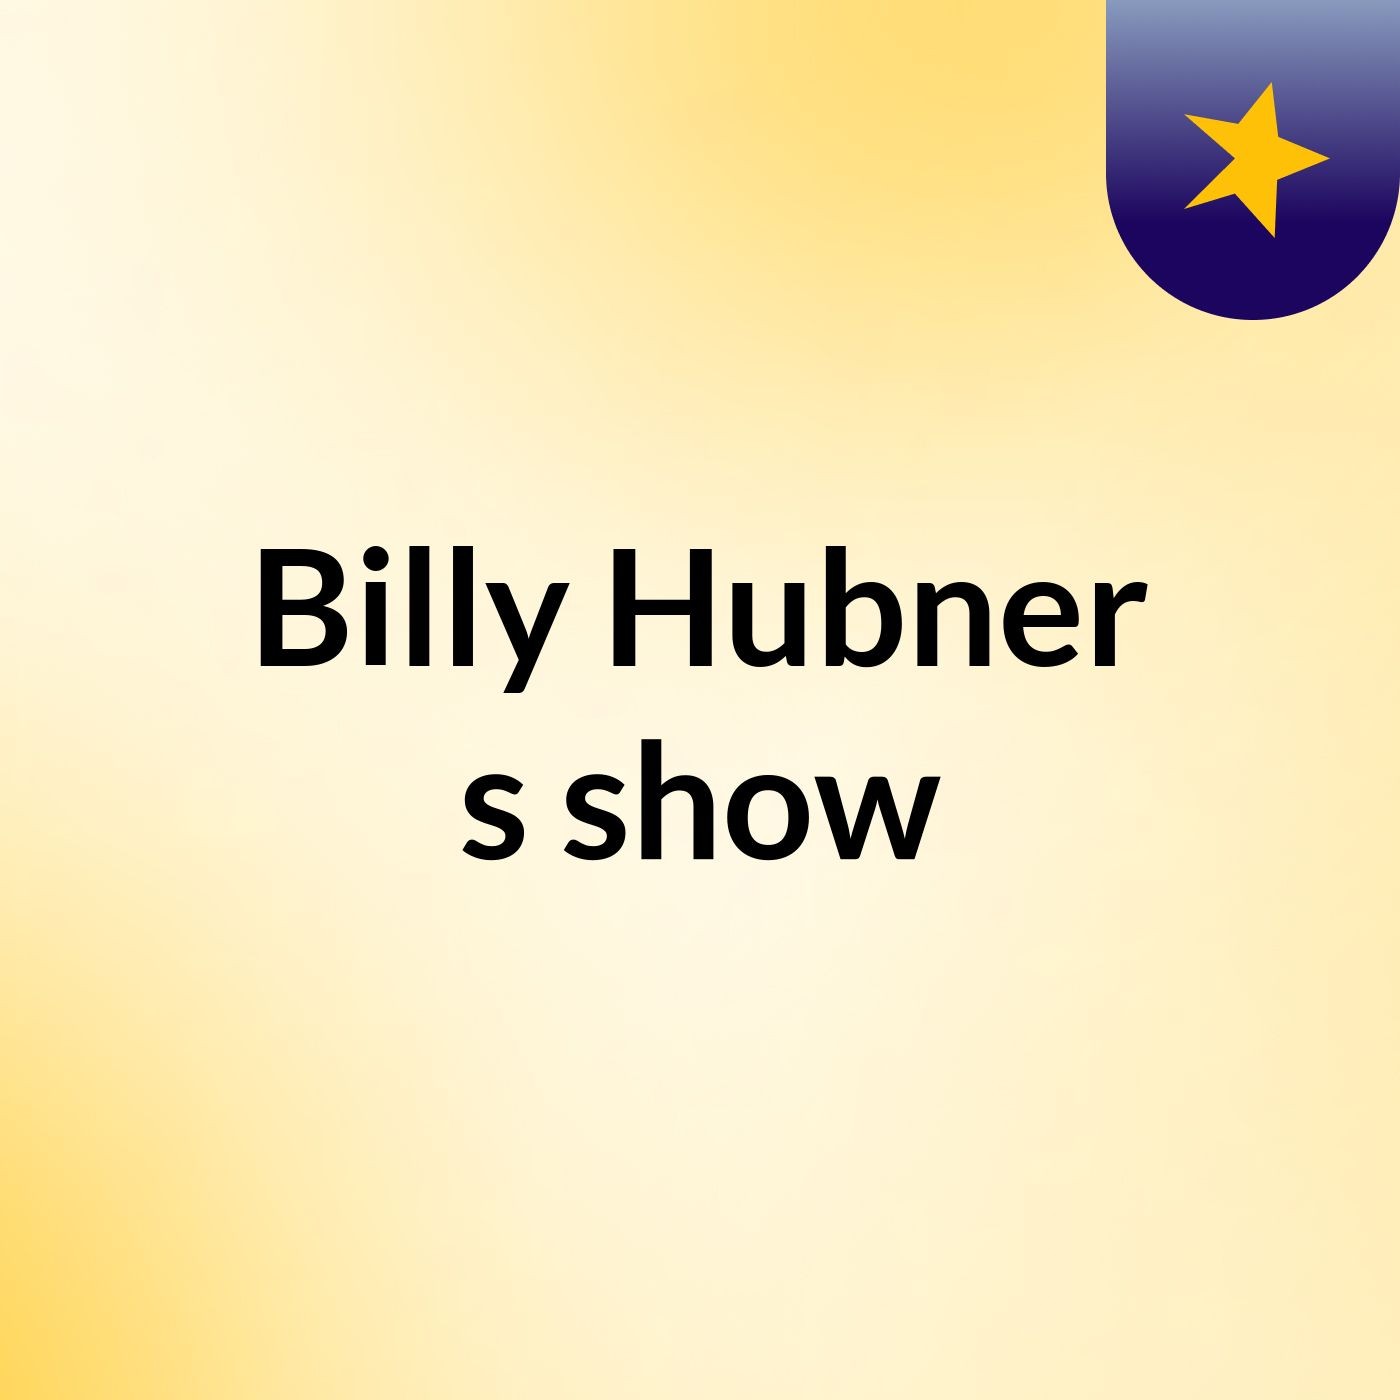 Episode 2 - Billy Hubner's show